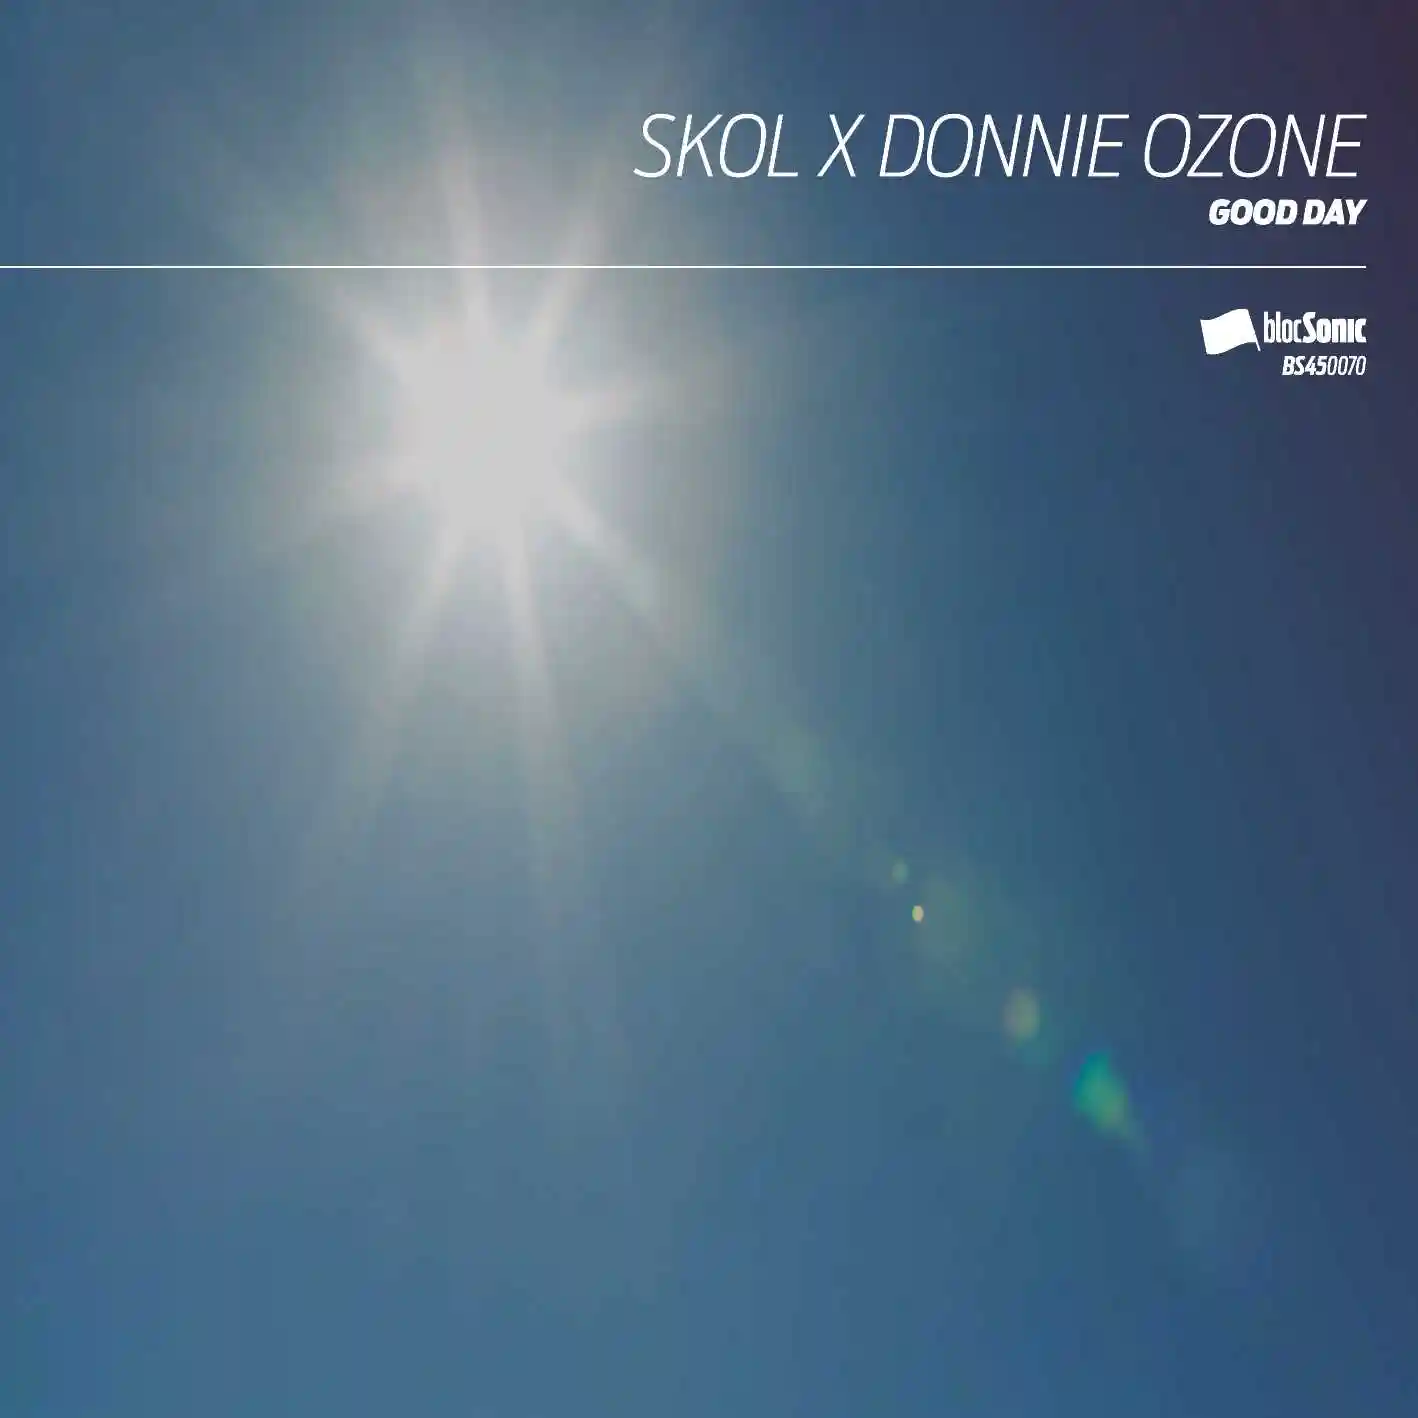 Album cover for “Good Day b/w On My Way” by SKOL x Donnie Ozone